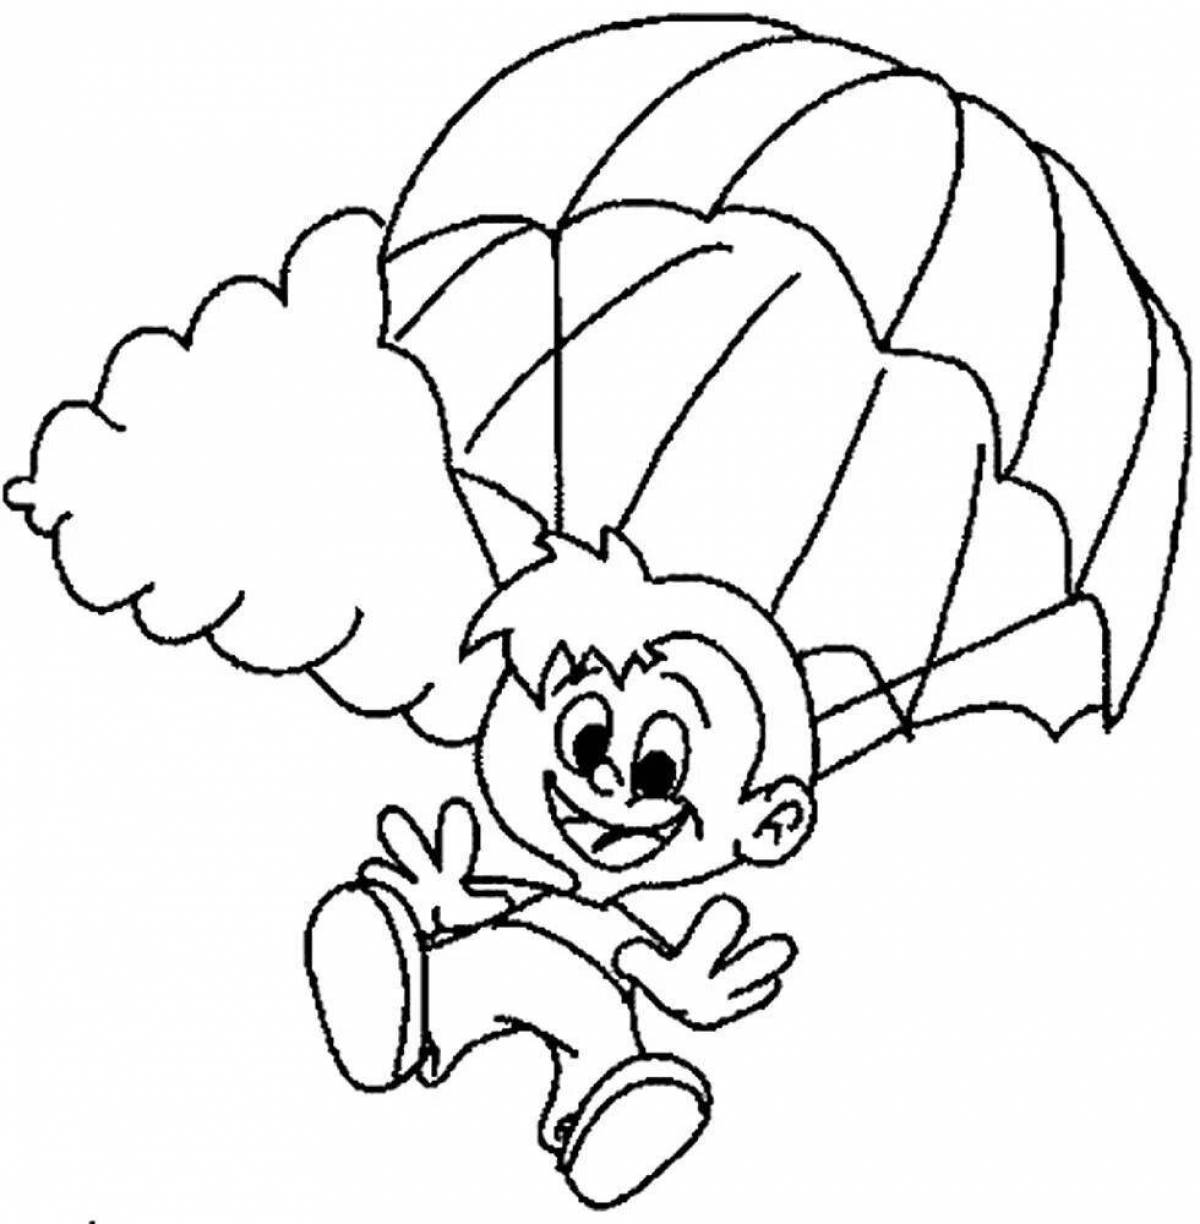 Children's fun parachute coloring book